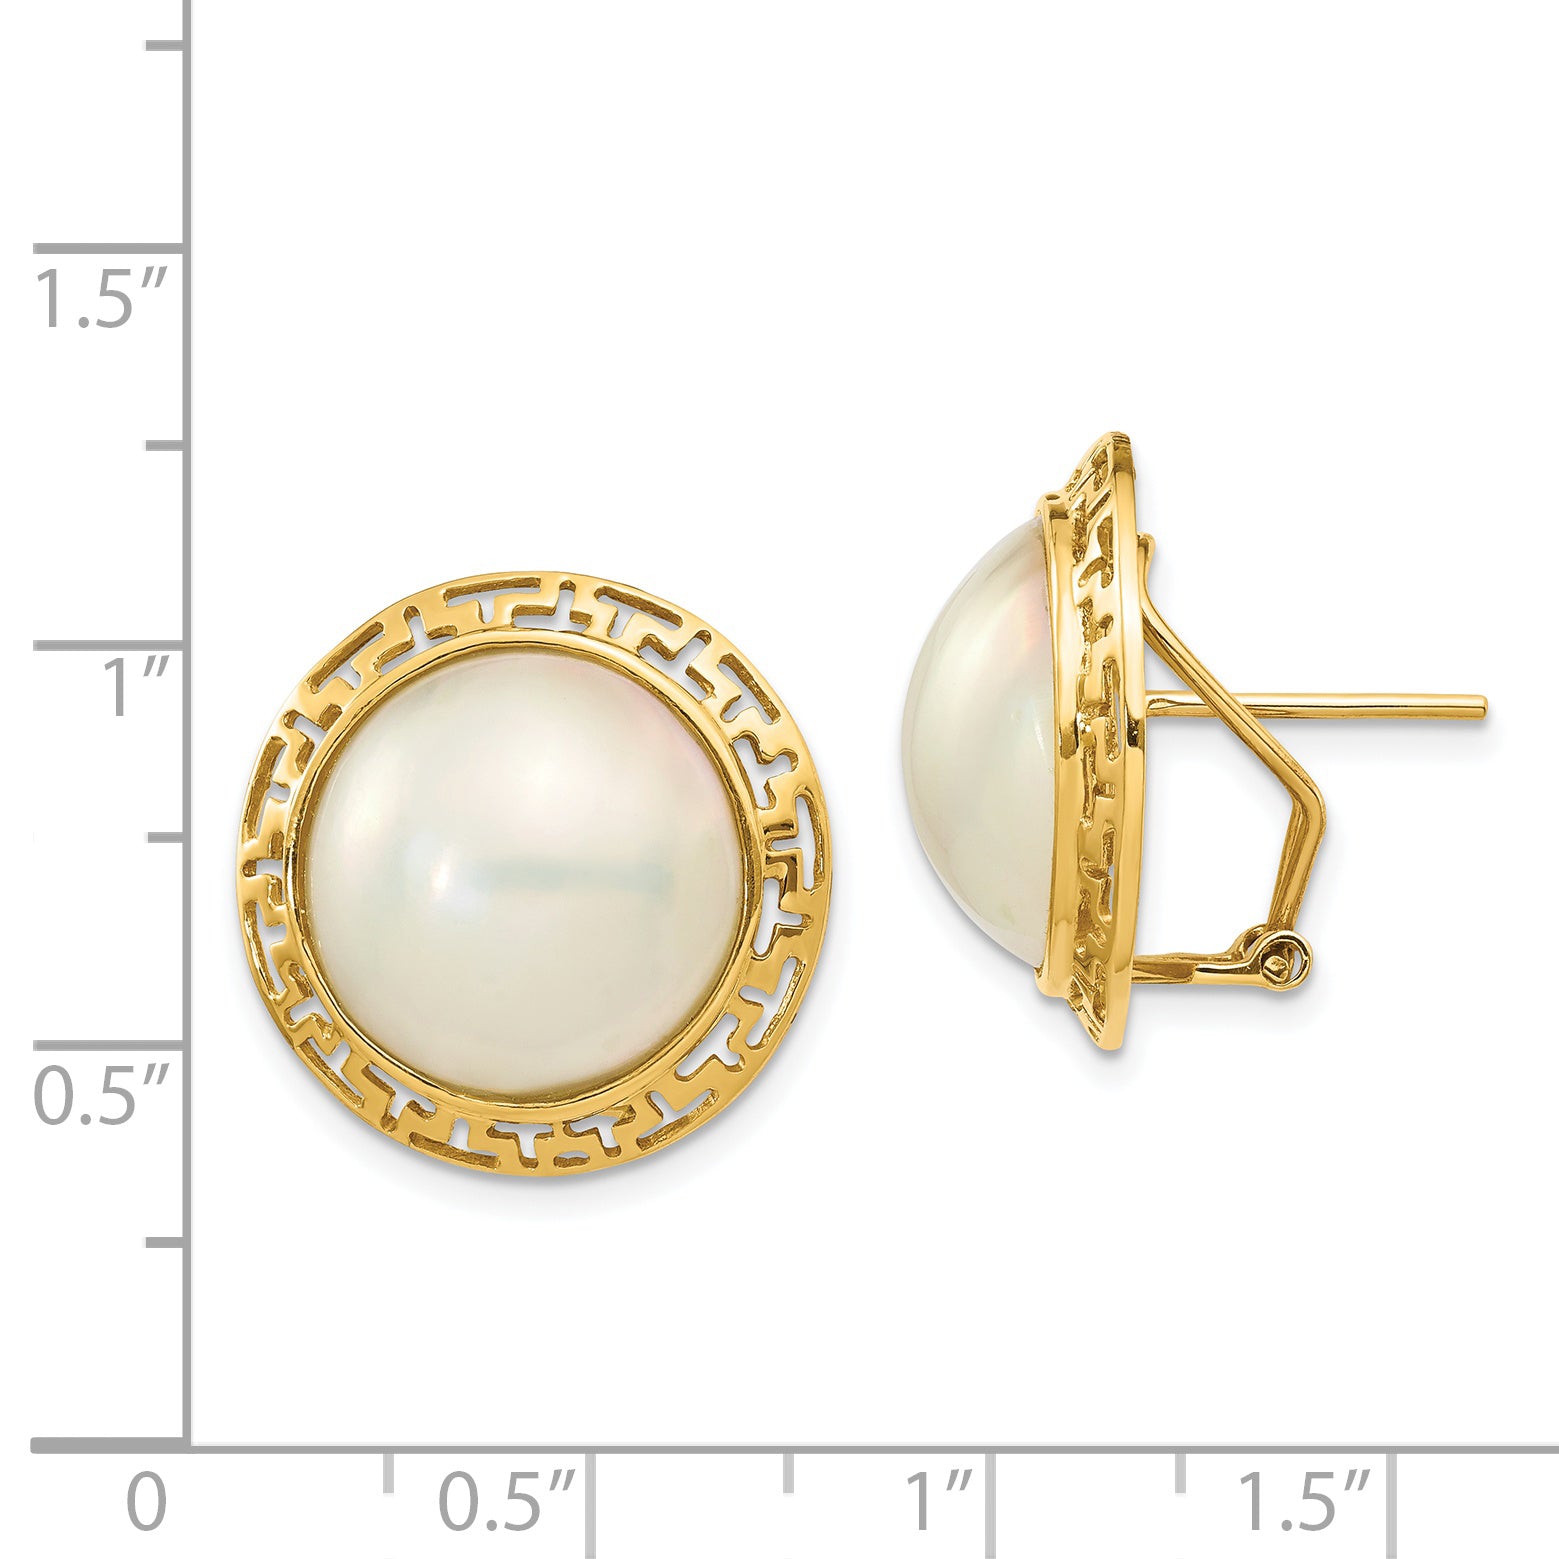 14k 14-15mm White Freshwater Cultured Mabe Pearl Omega Back Earrings